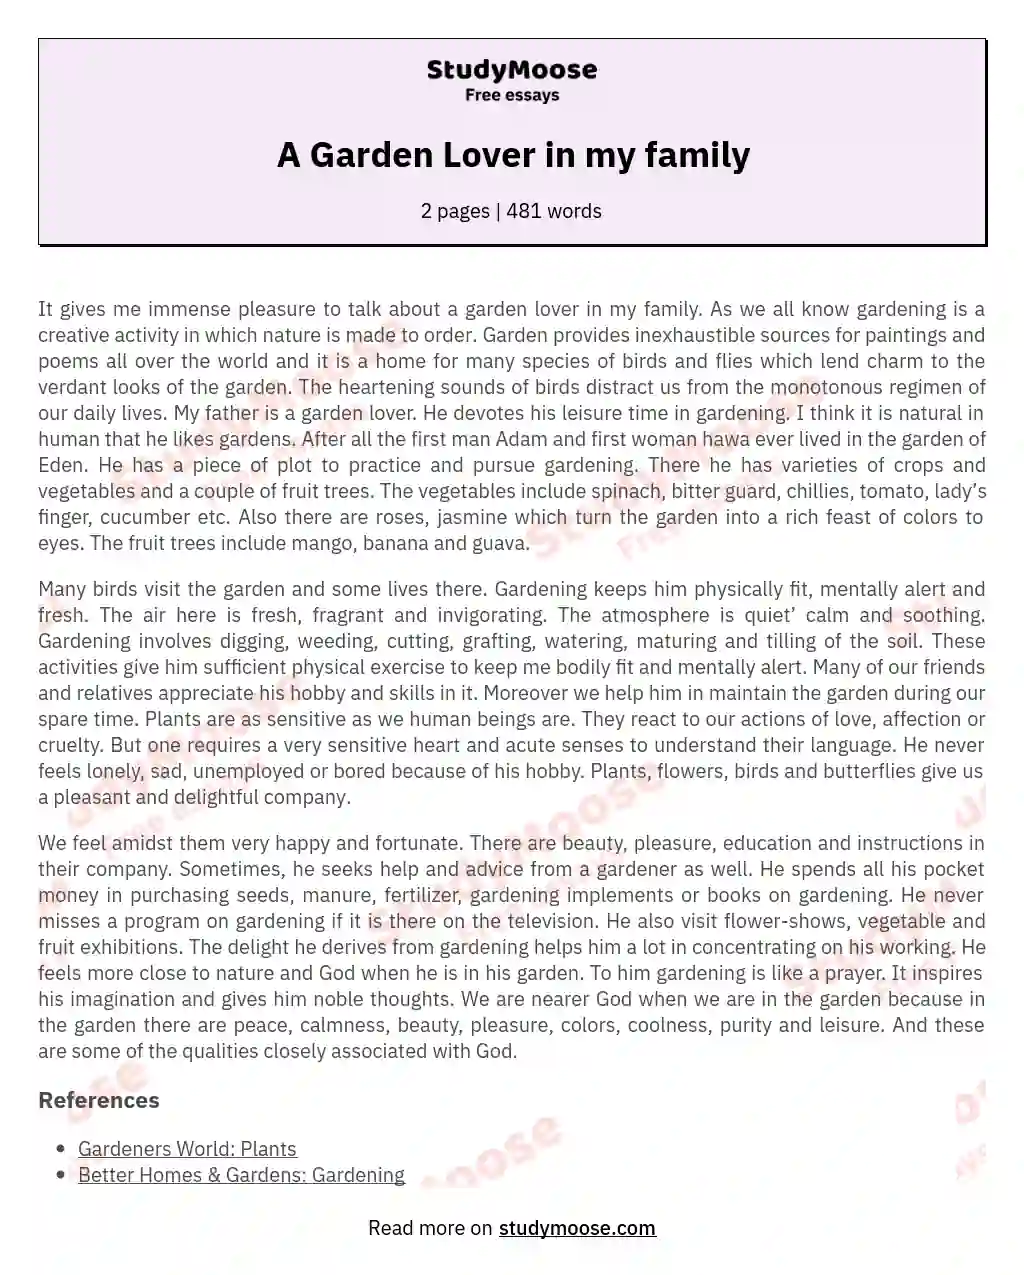 A Garden Lover in my family essay